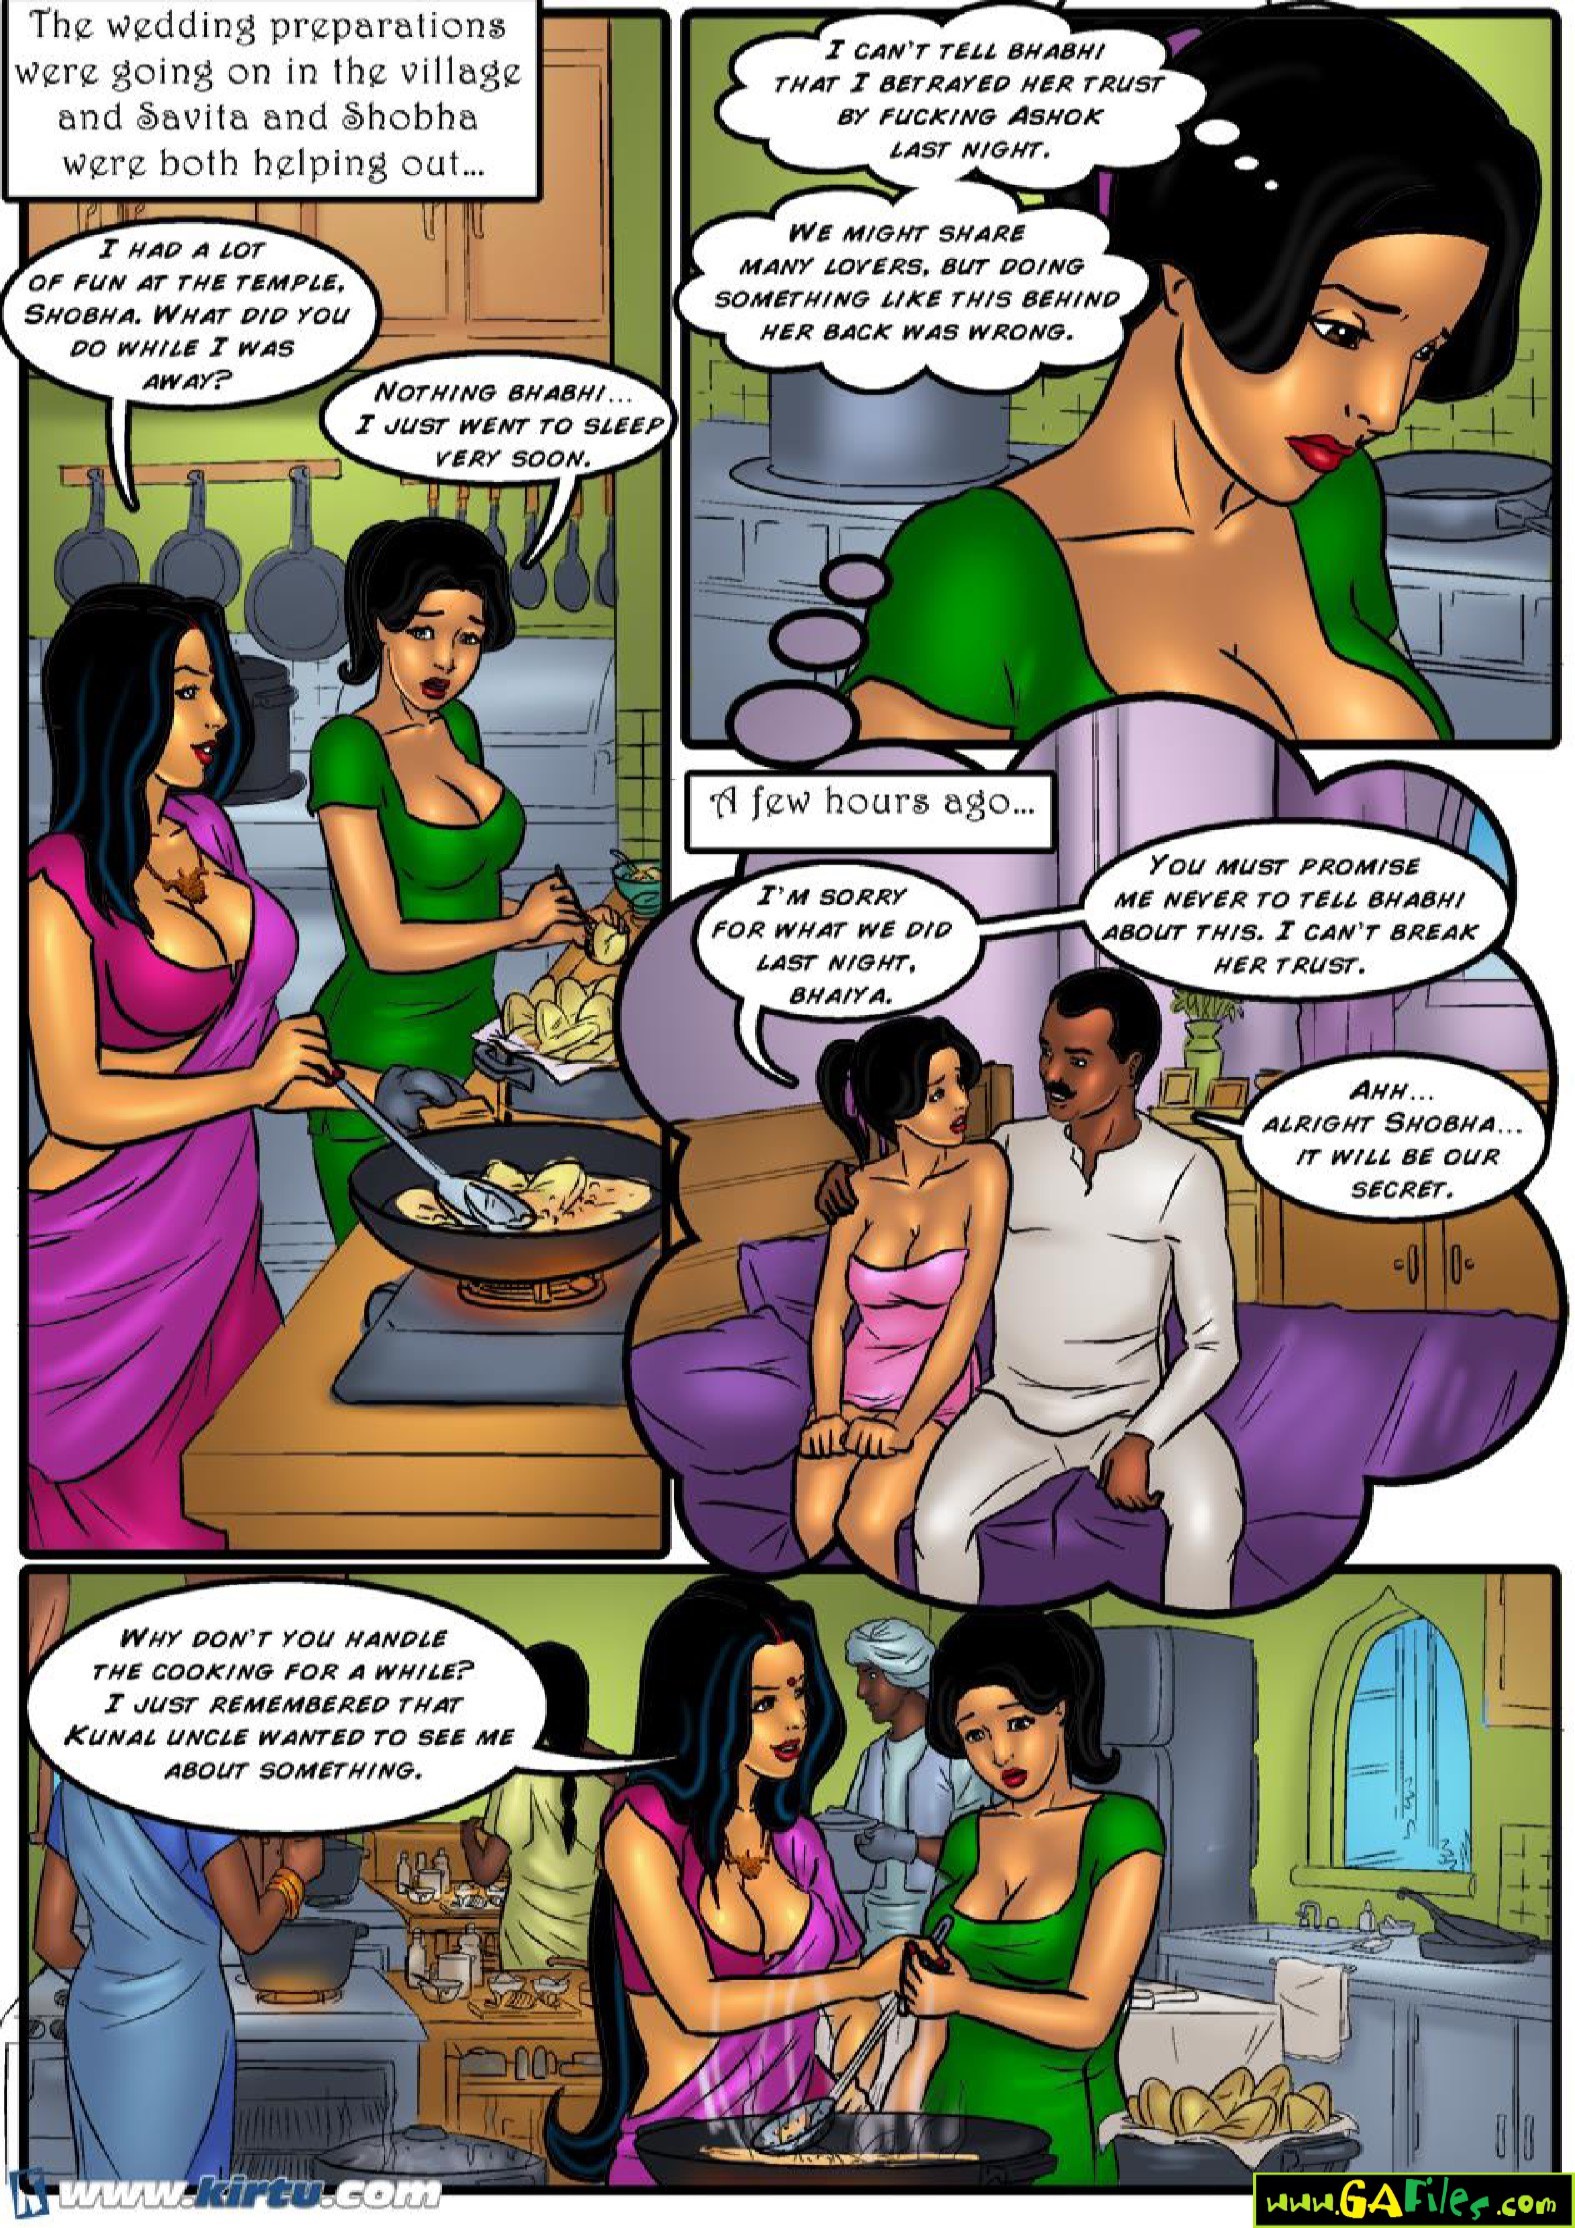 Fucking The Bride Comics - Savita Bhabhi 39 Replacement Bride